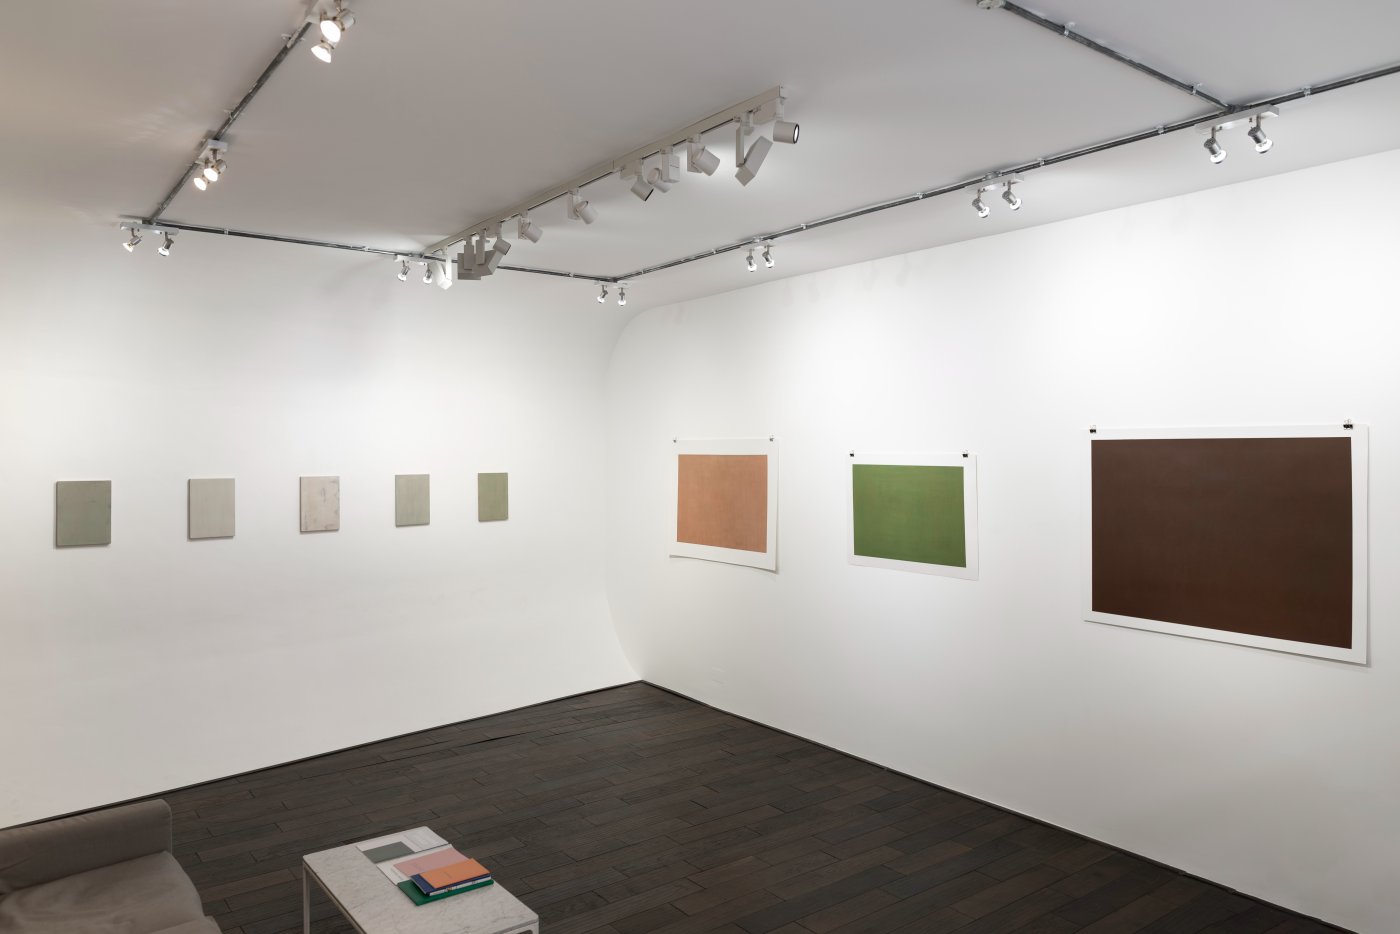 Installation image for Stephan Baumkötter: Recent Works, at Bartha Contemporary